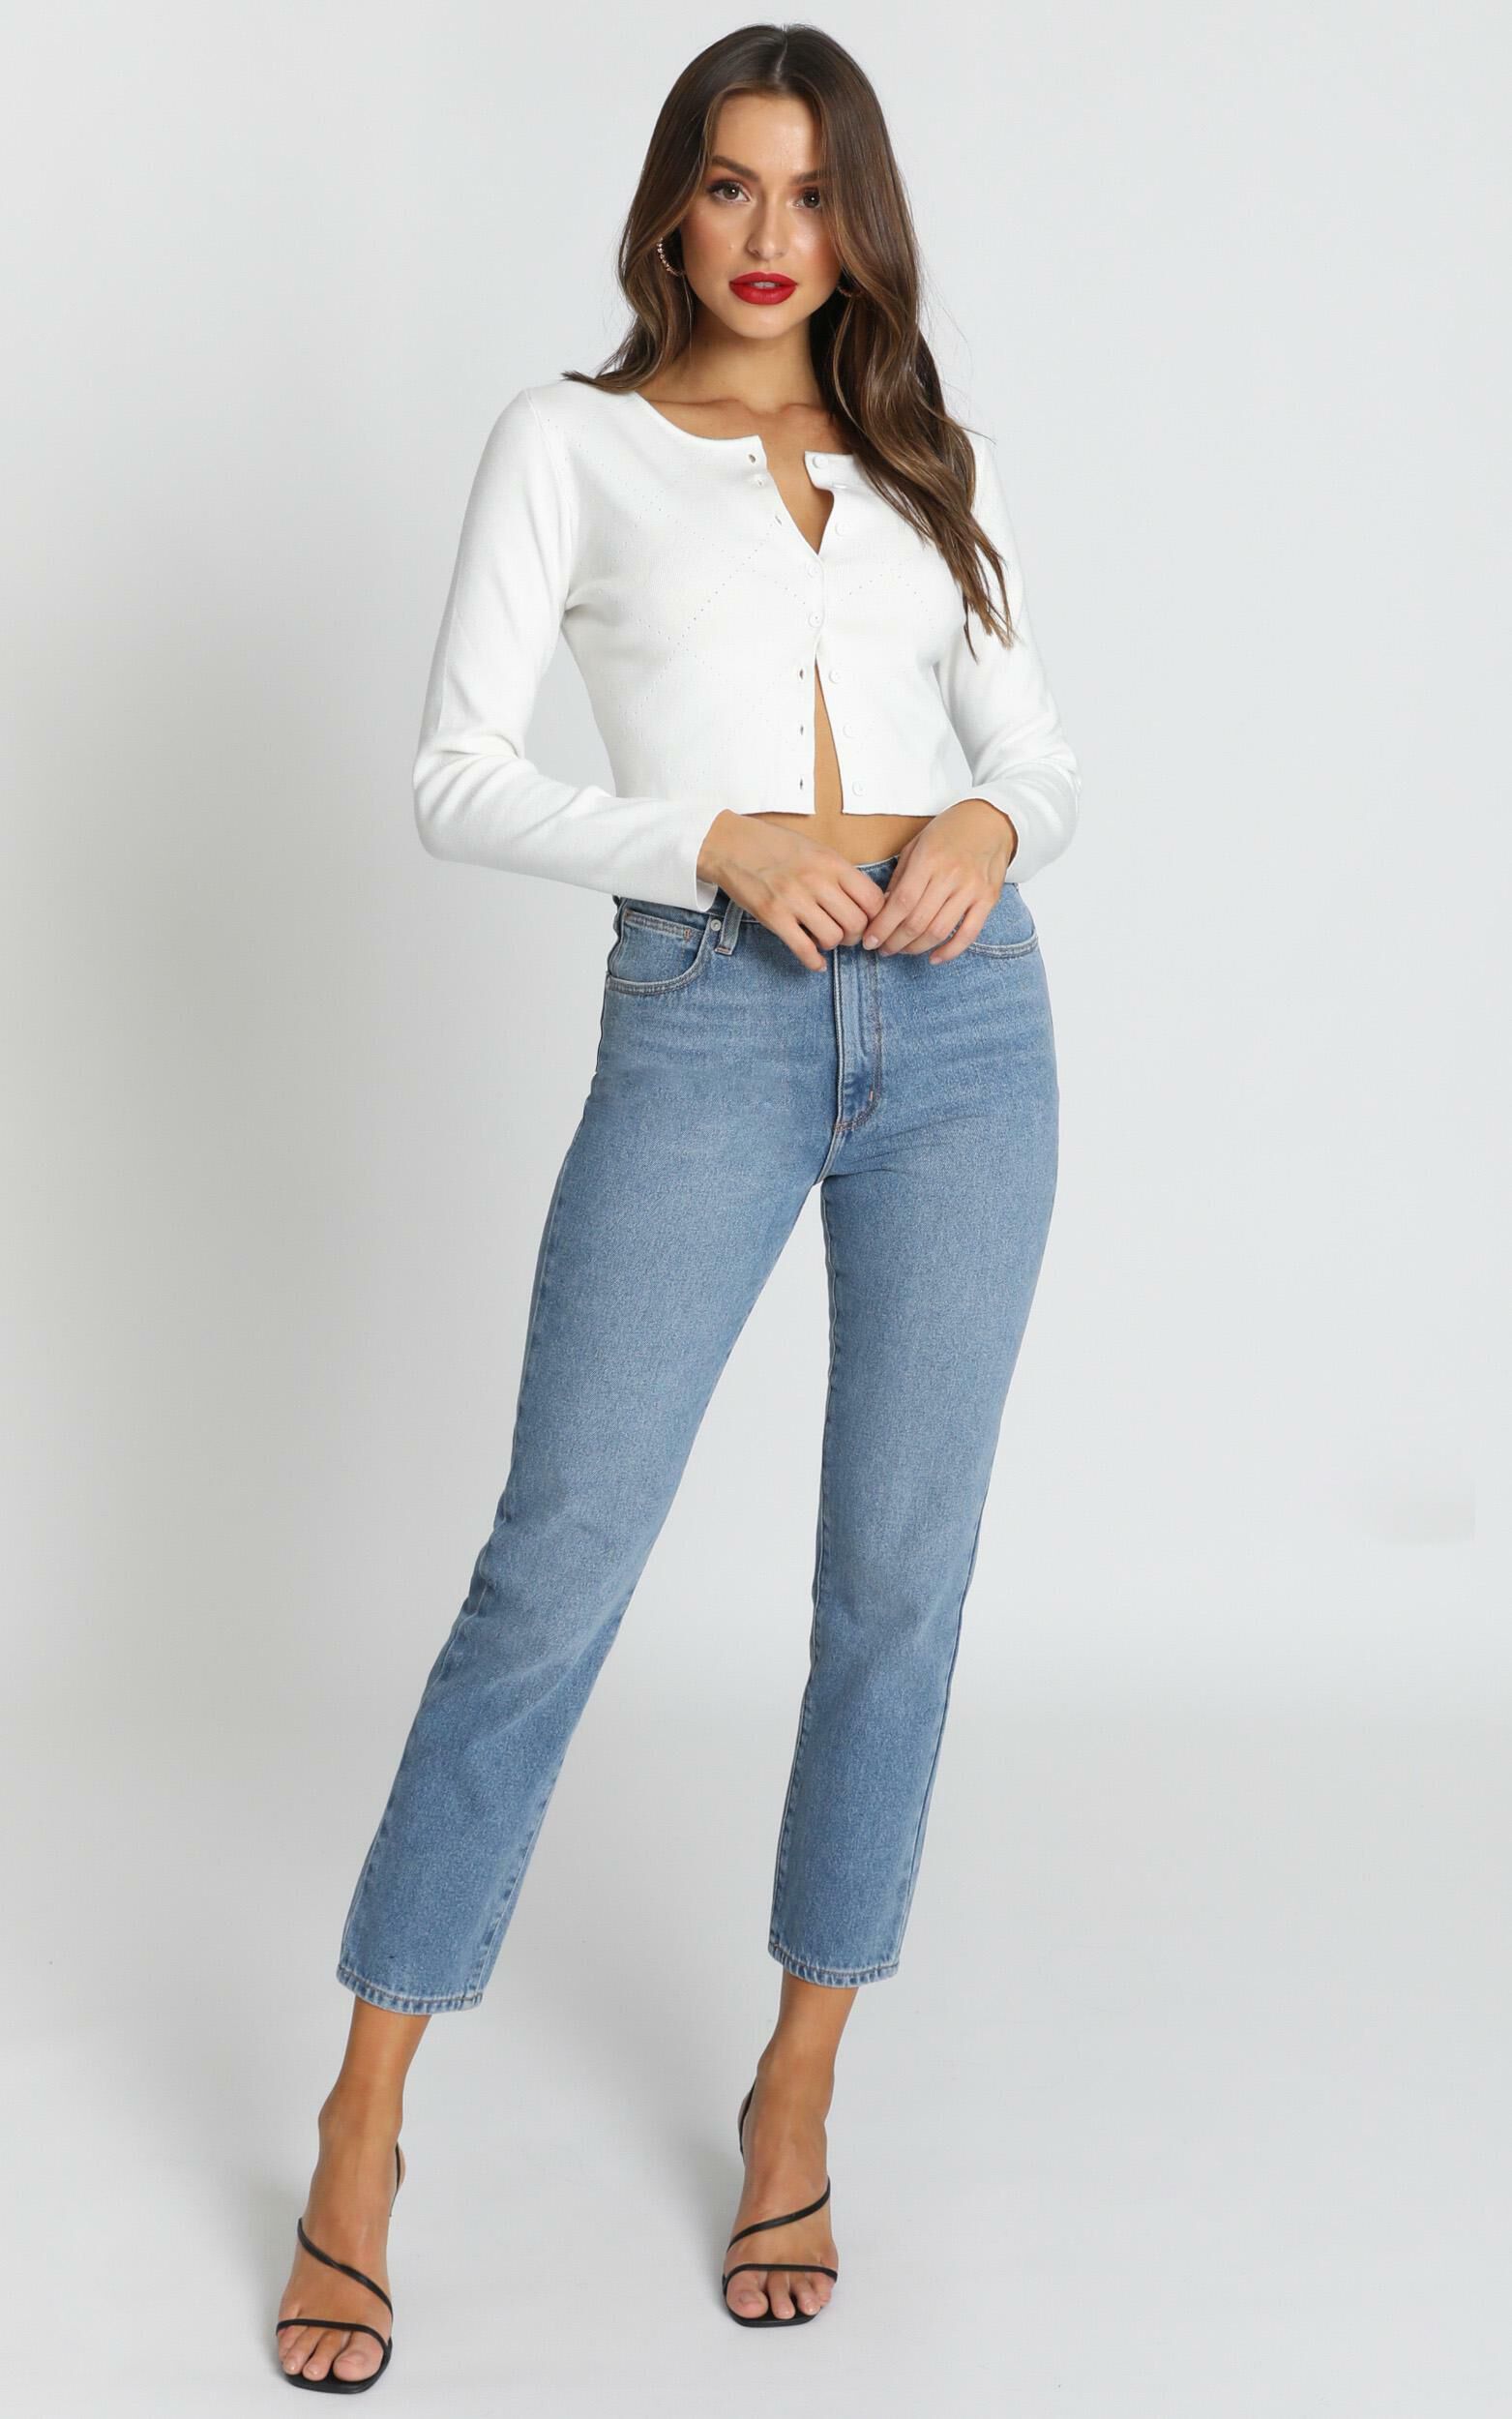 Abrand - A '94 High Slim Jeans in Miss Jane | Showpo